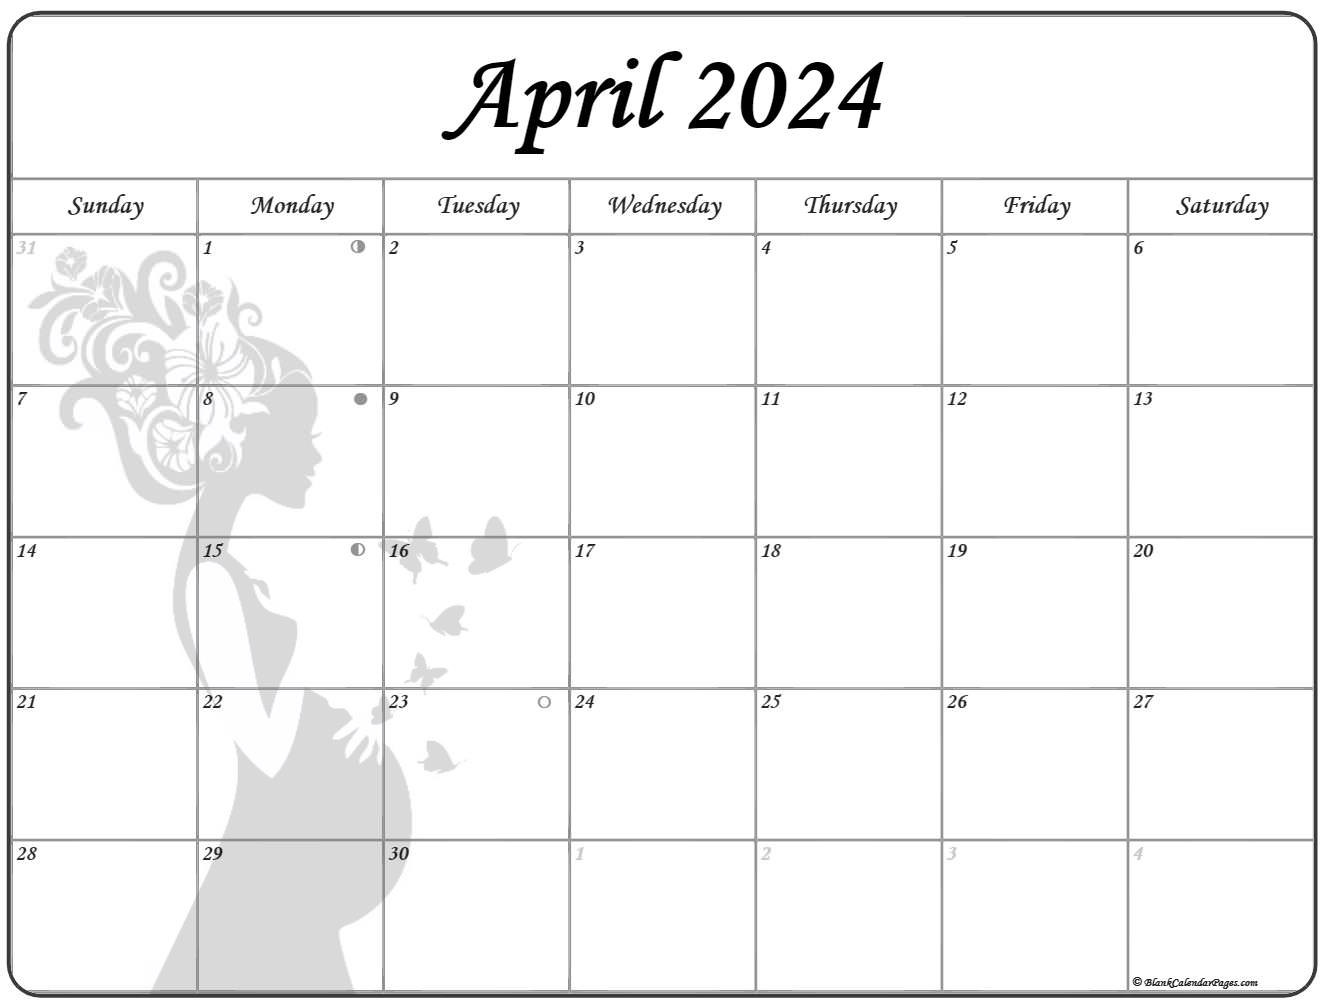 April 2020 Pregnancy Calendar | Fertility Calendar